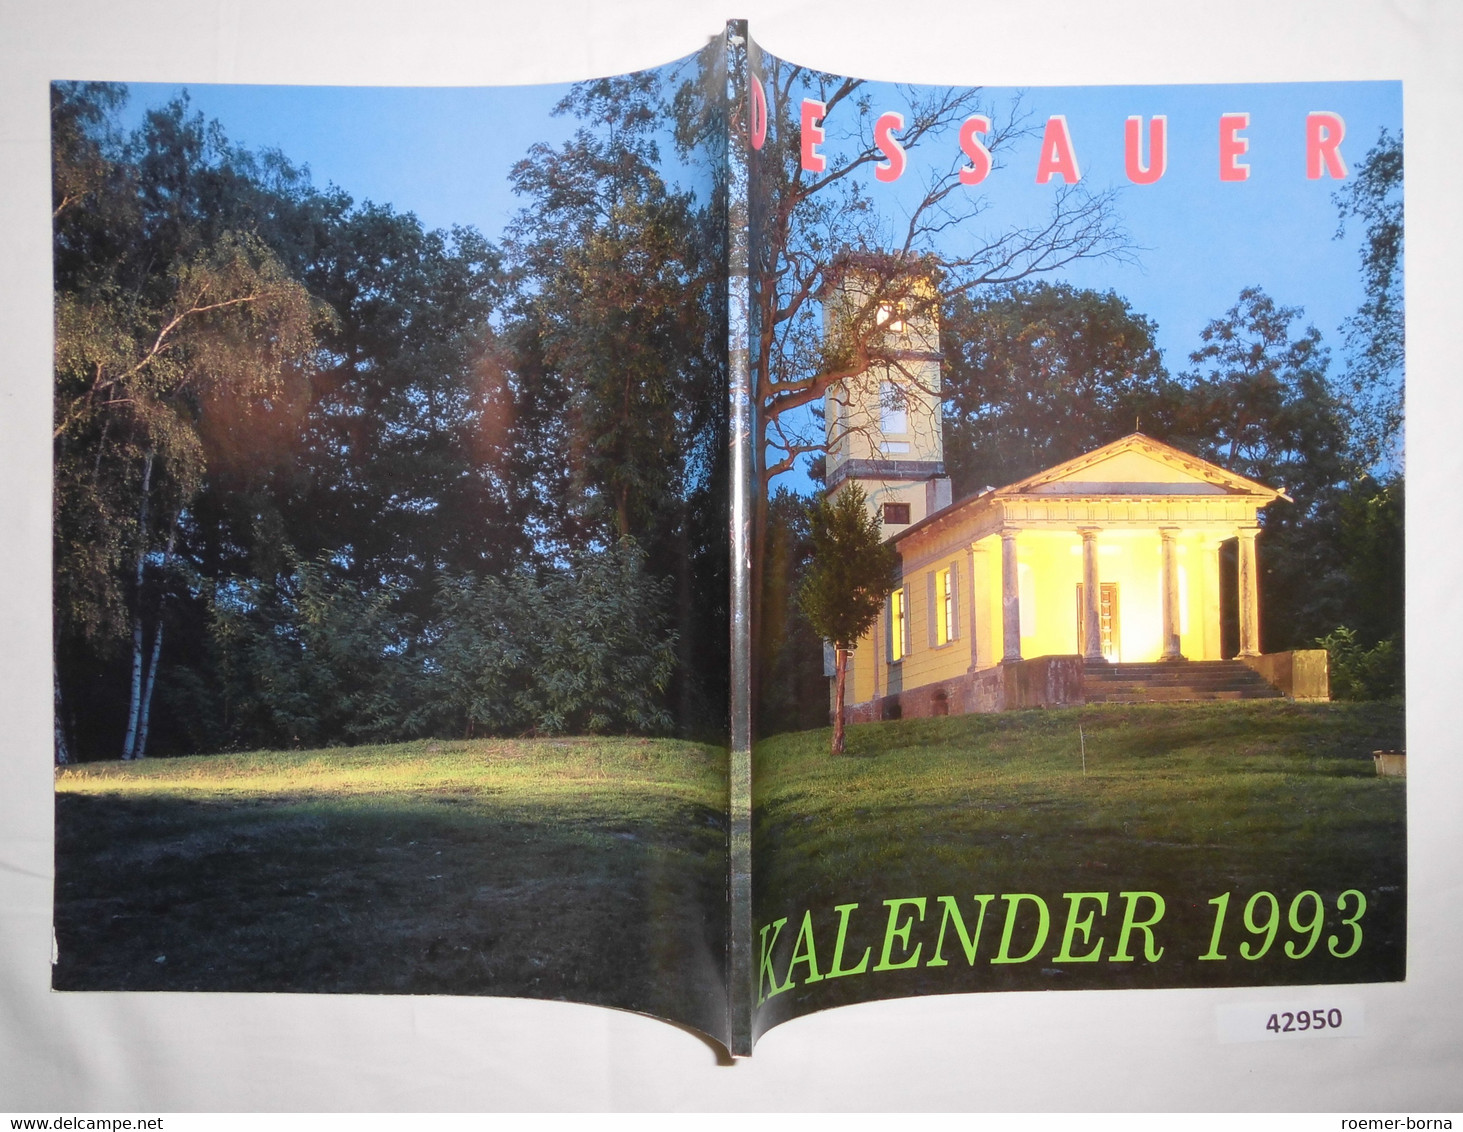 Dessauer Kalender 1993 (37. Jahrgang) - Kalender